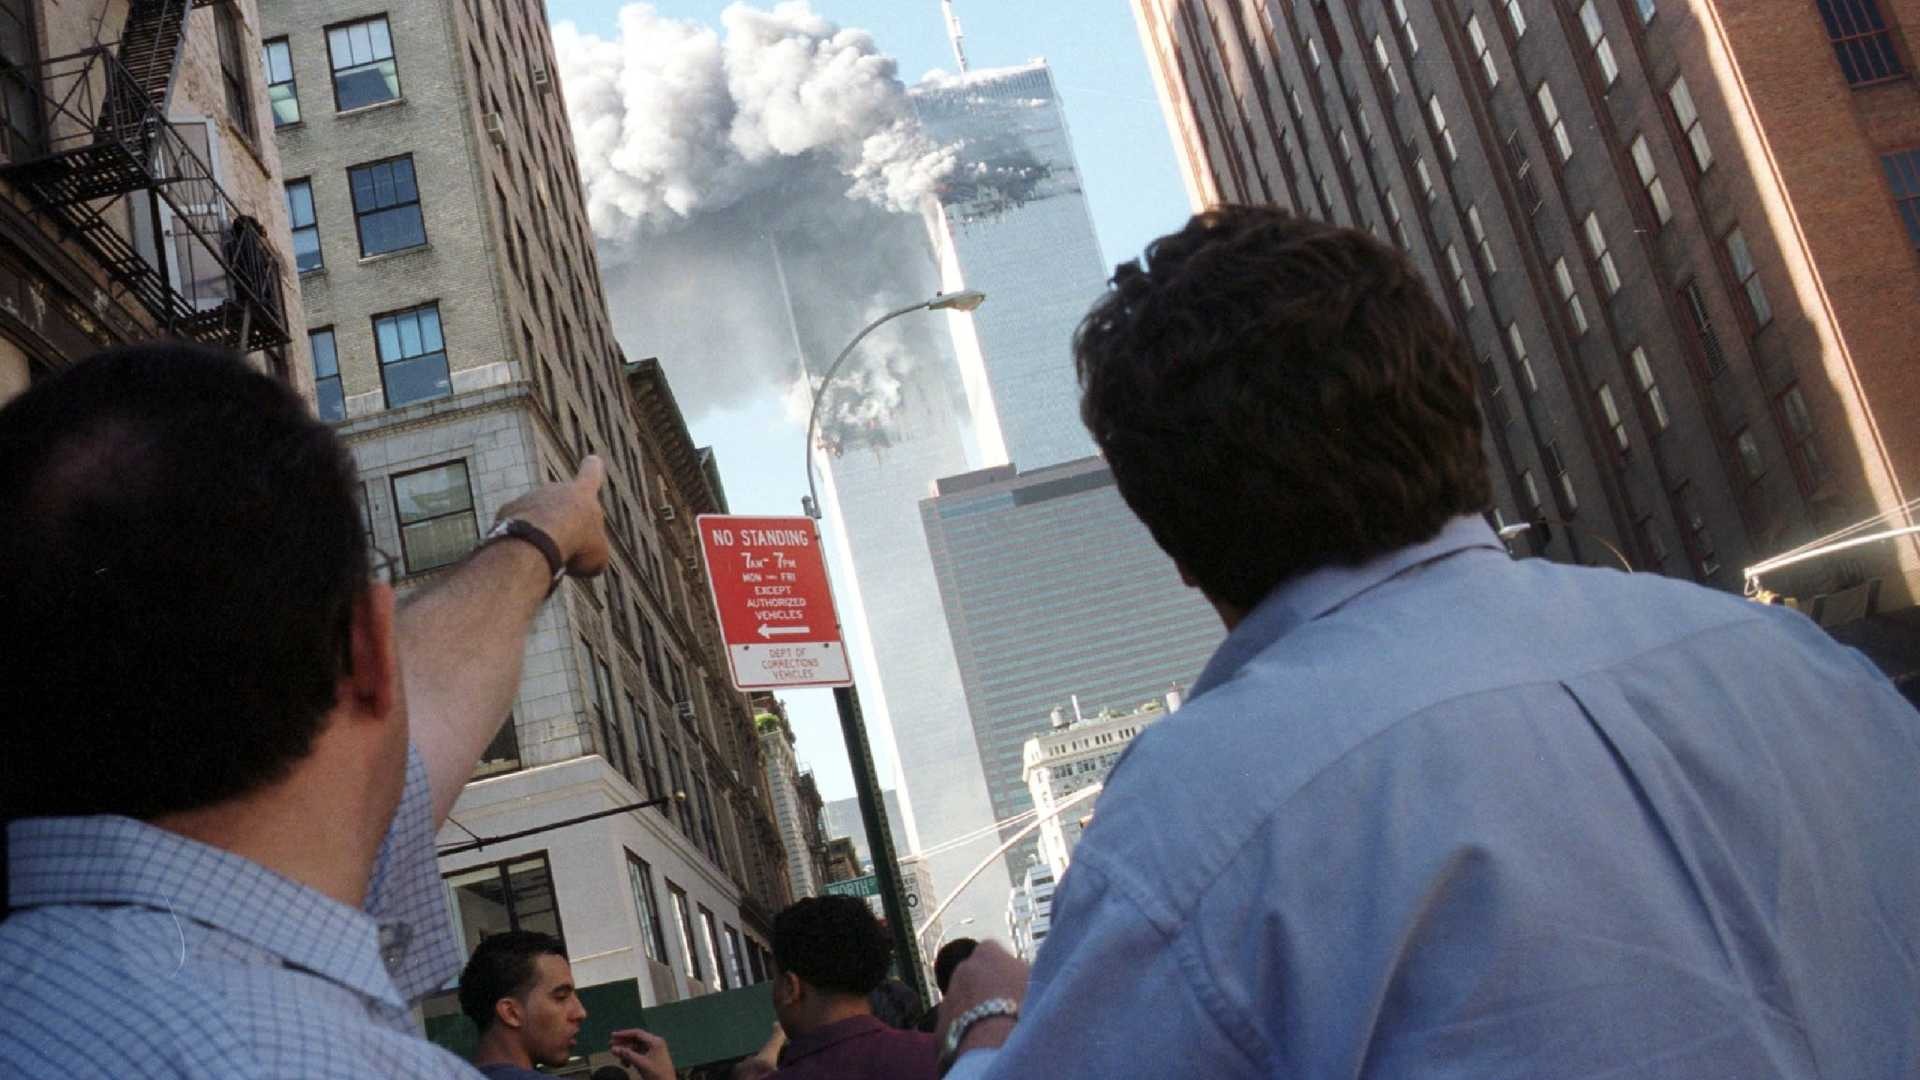 O 11 de Setembro: 17 anos do ataque que mudou o mundo